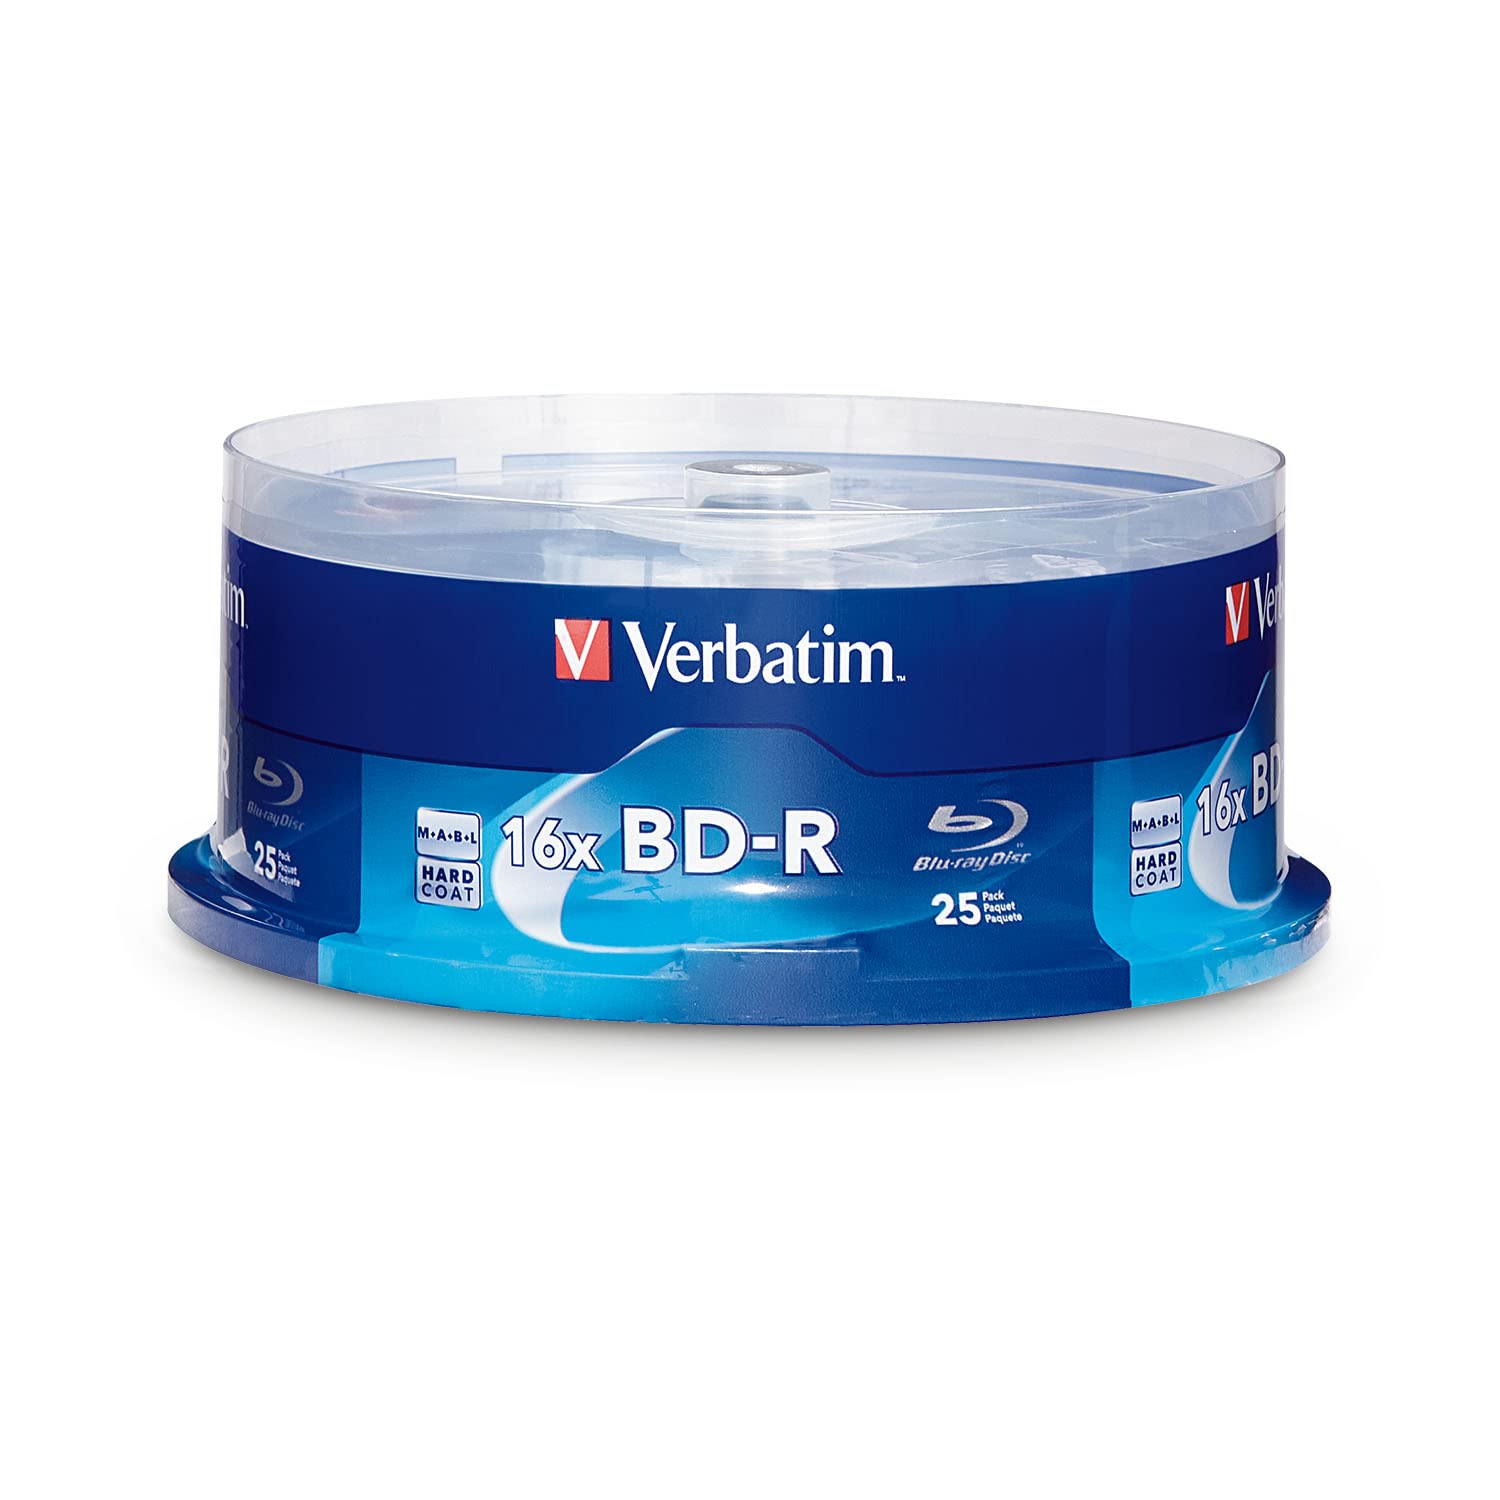 Verbatim BD-R 25GB 16X Blu-ray Recordable Media Disc - 25 Pack Spindle - 97457